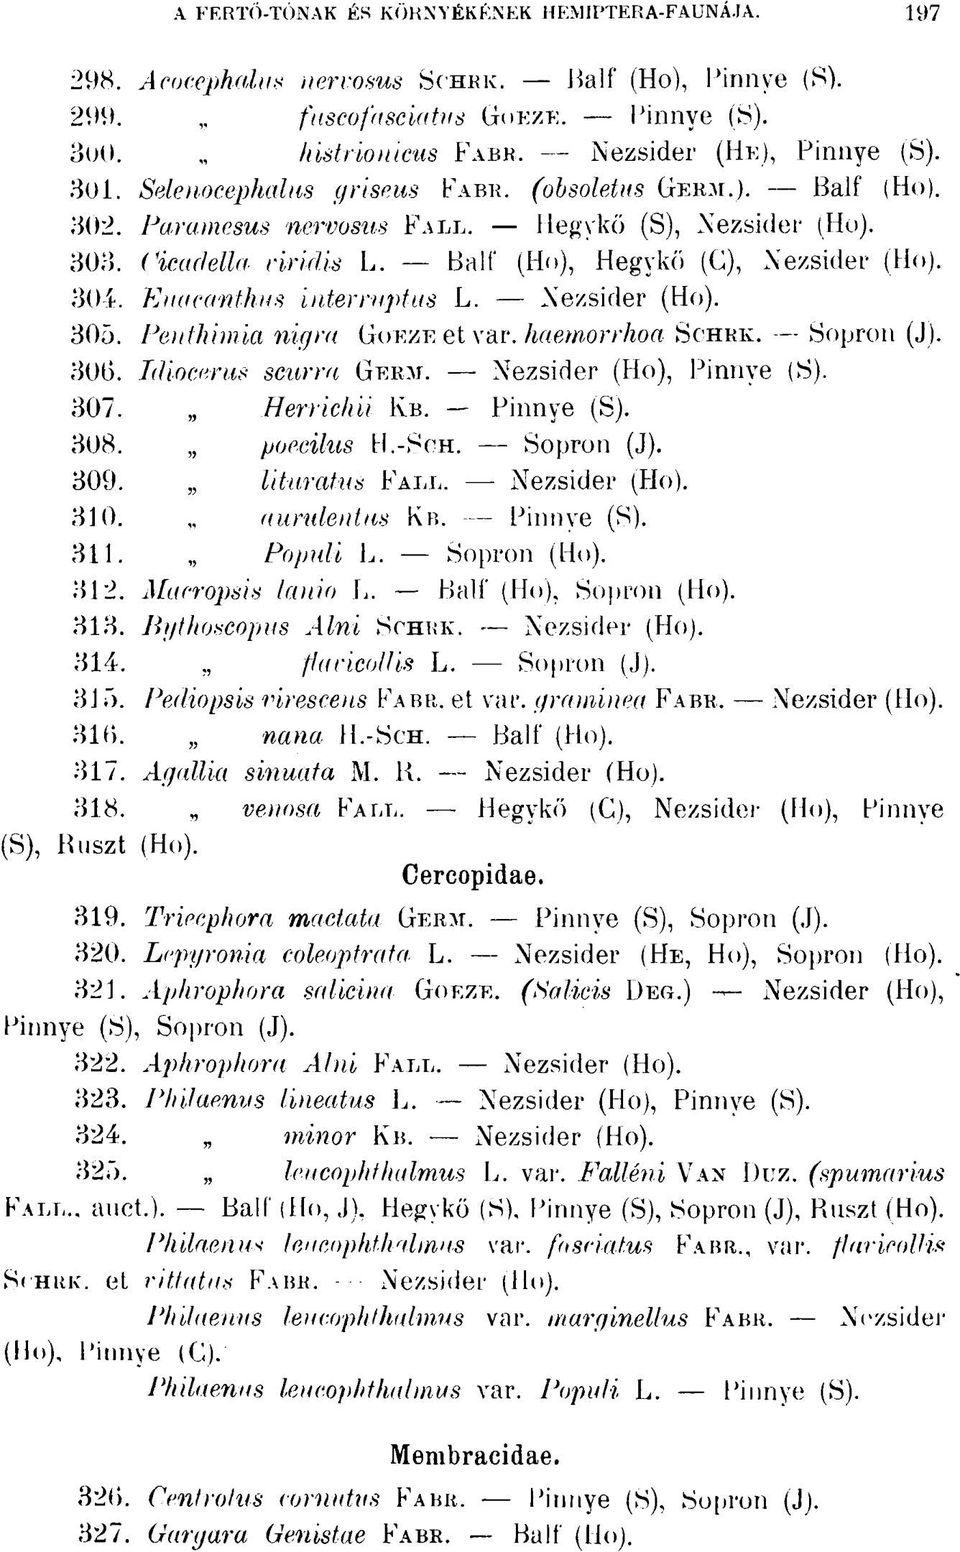 Euaeanthus interruptus L. Nezsider (Ho). 305. Penthimia nigra GOEZE et var. haemorrhoa SCHRK. Sopron (J). 306. Idiocerus scurra GERM. Nezsider (HO), Pinnye (S). 307. Herrichii KB. Pinnye (S). 308.